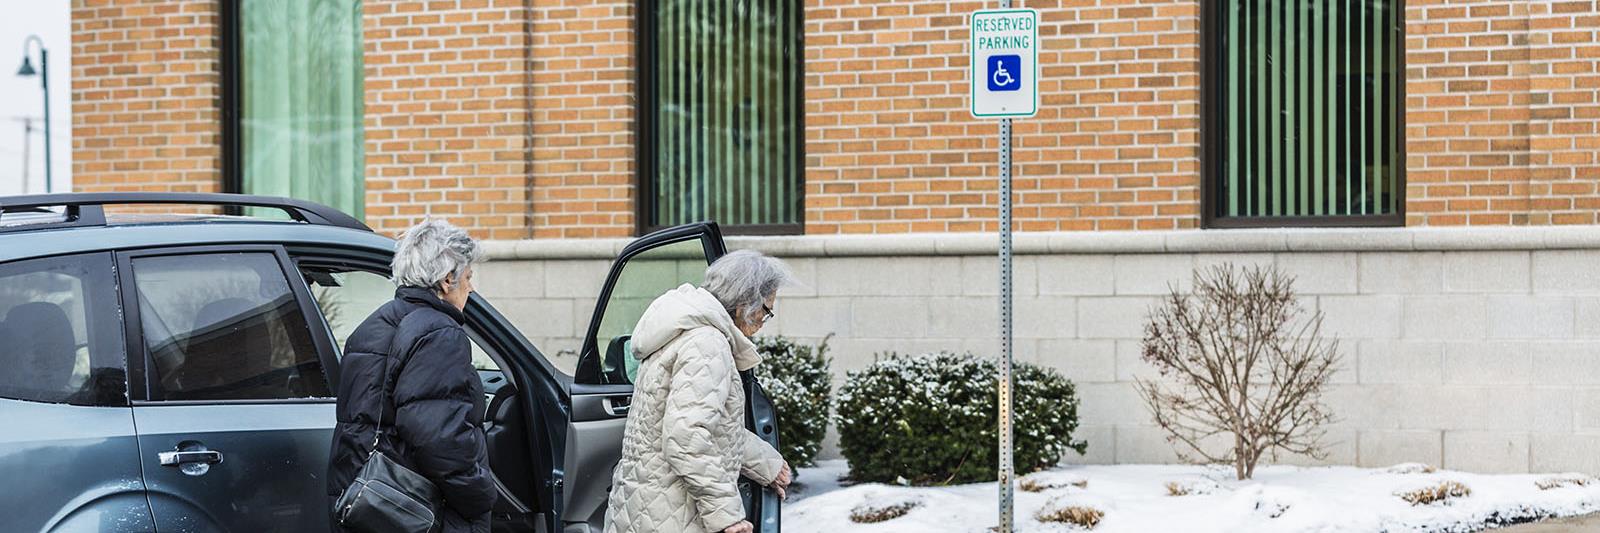 elderly women park in disabled parking spot